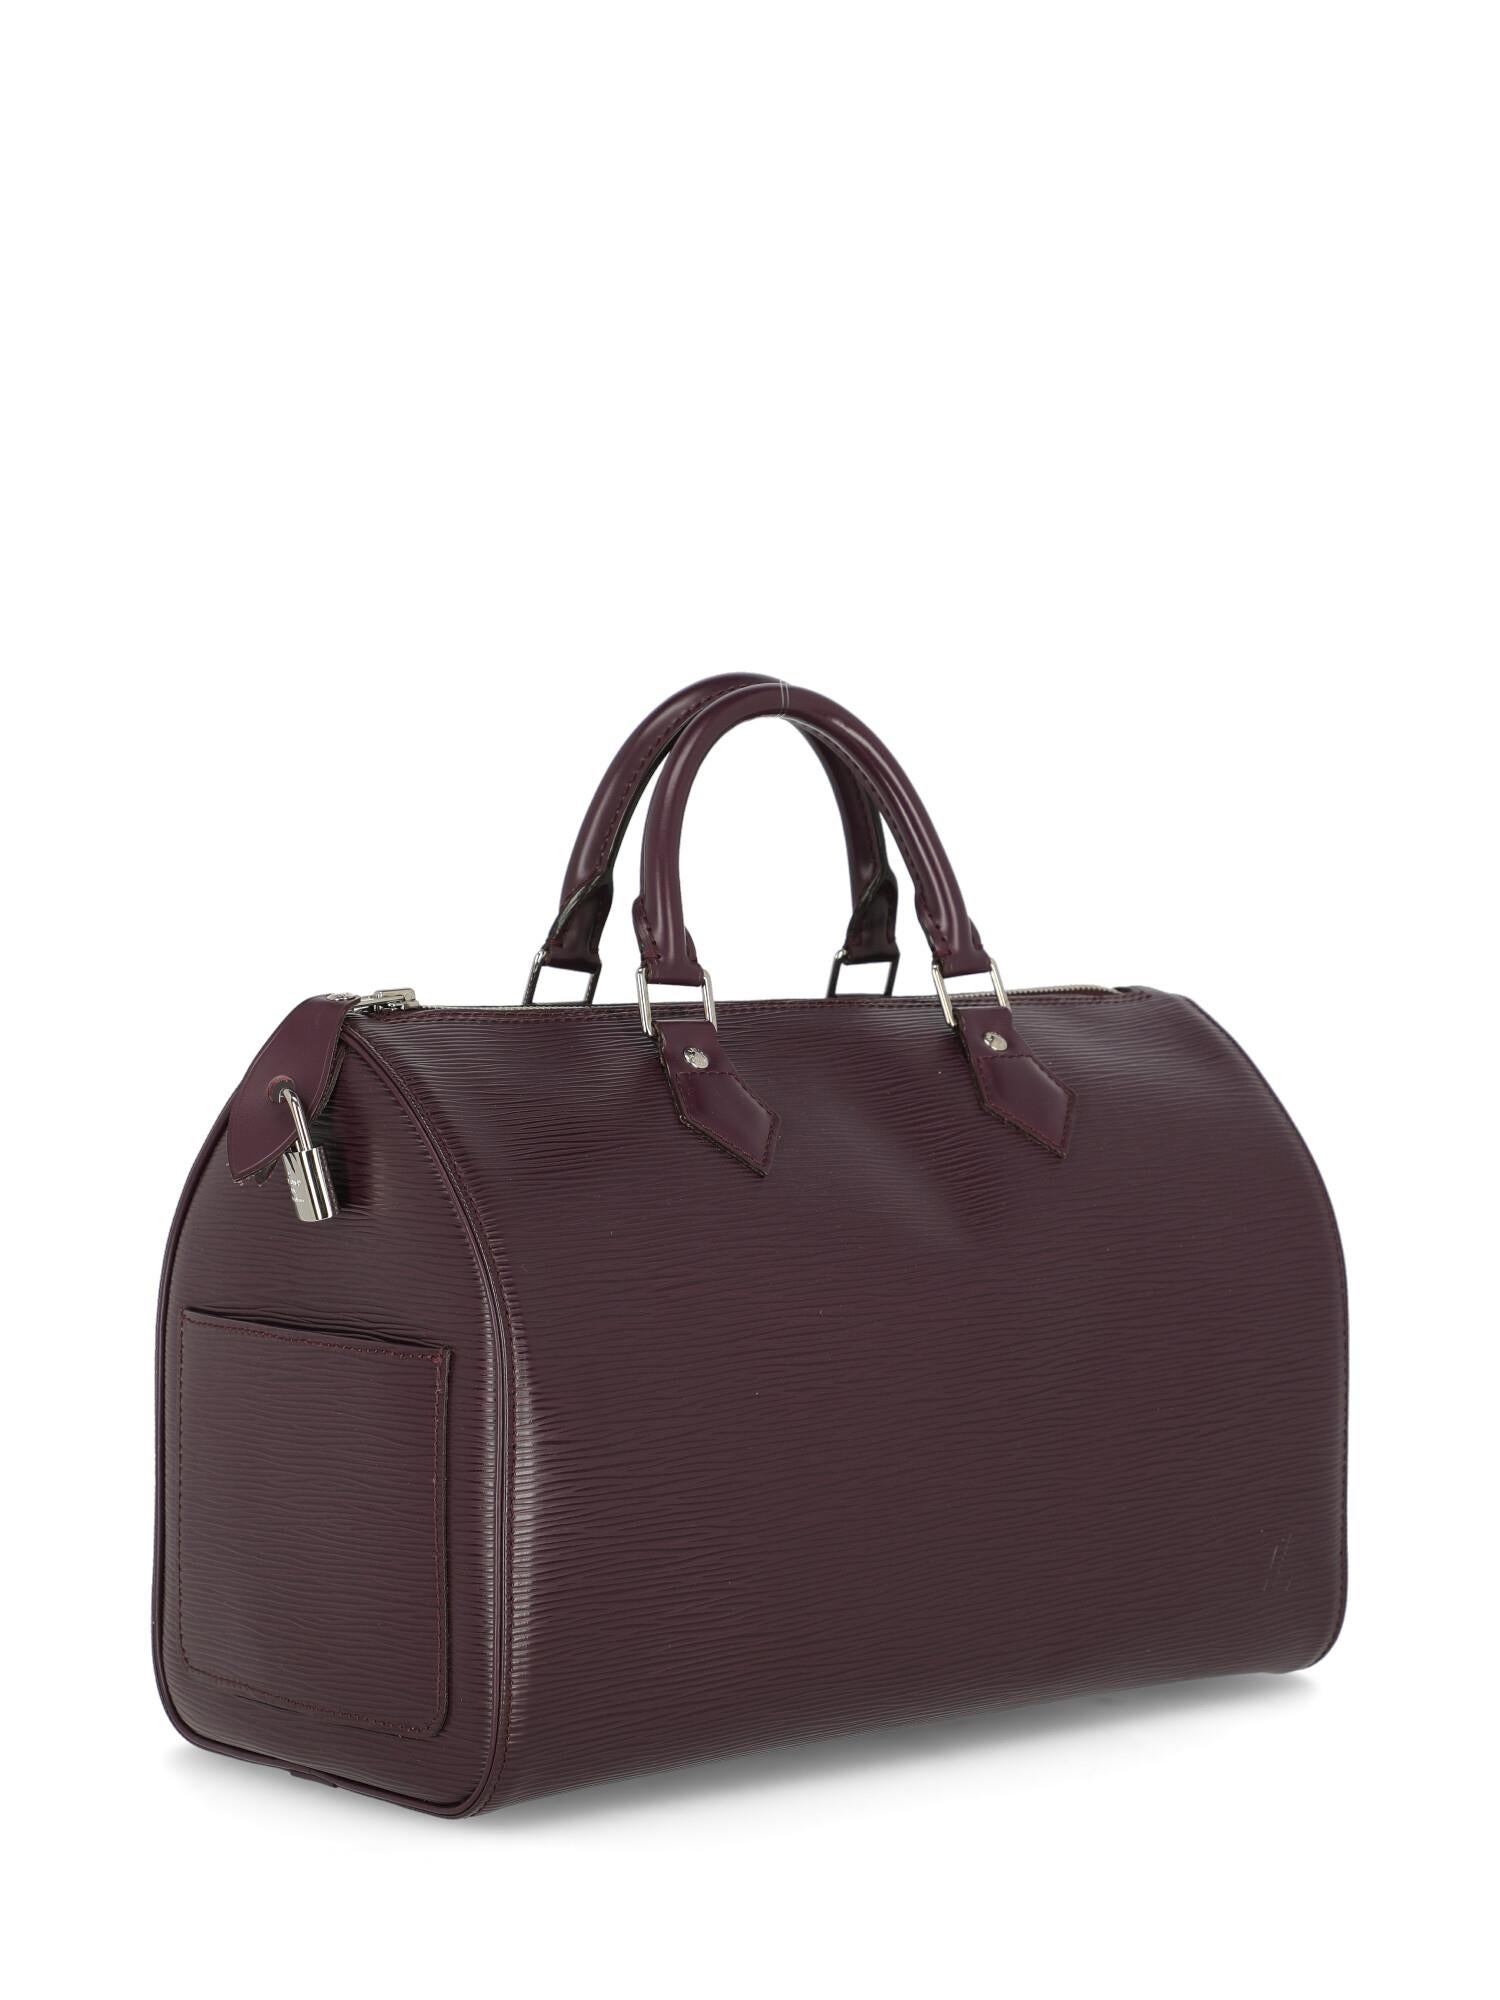 Black Louis Vuitton Woman Handbag Speedy 35 Purple Leather For Sale